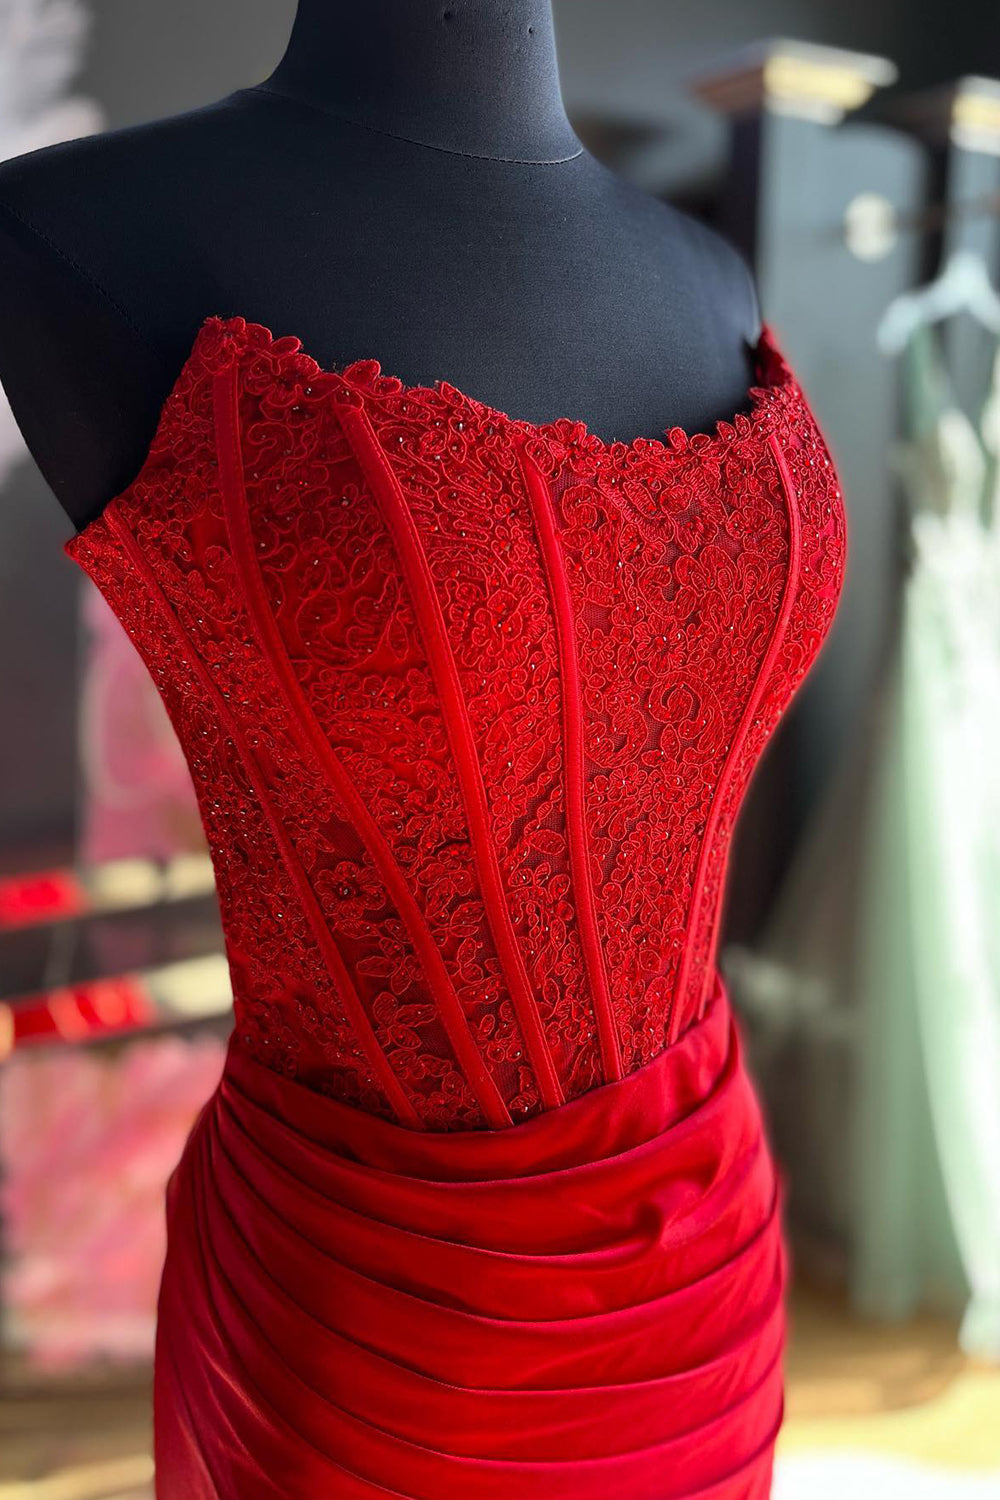 Red Corset Dress -  Canada